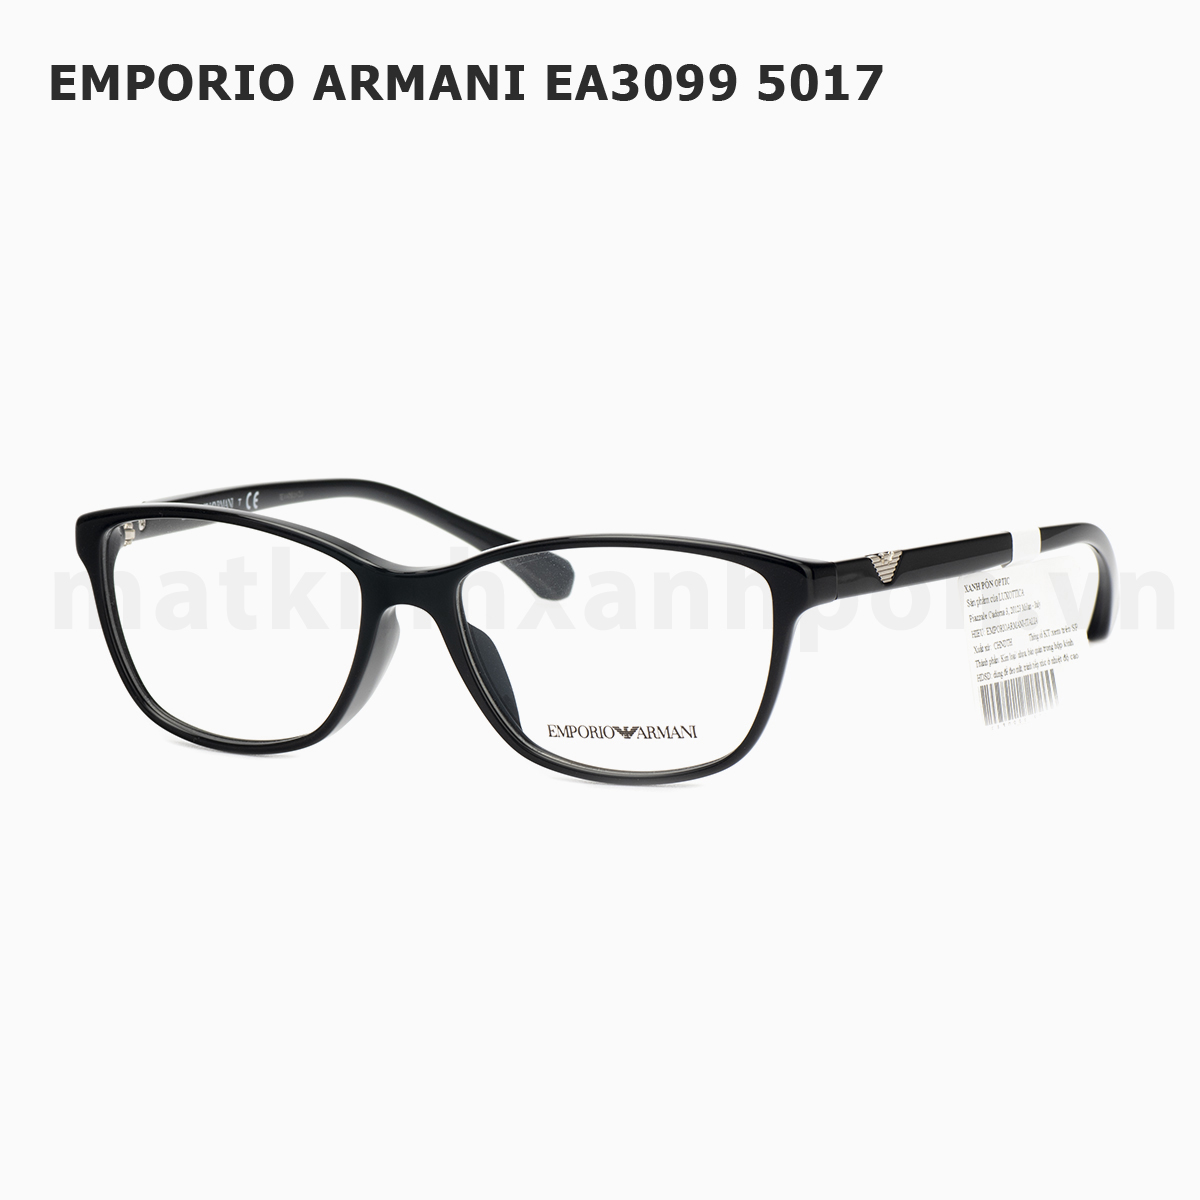 Emporio Armani EA3099 5017